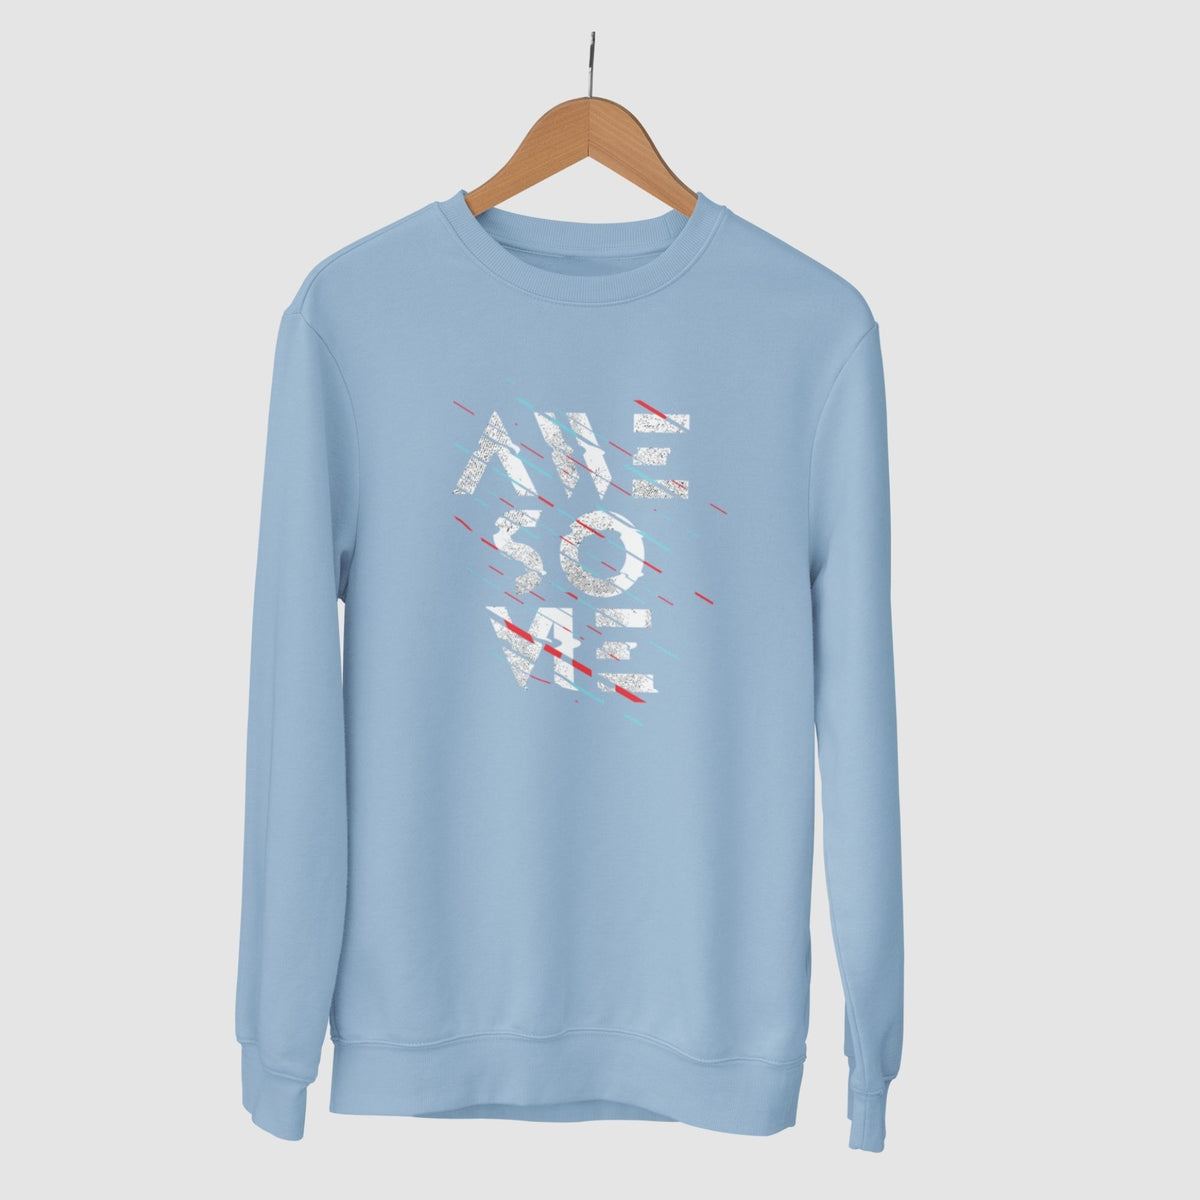 awesome-cotton-printed-unisex-light-blue-sweatshirt-gogirgit-com